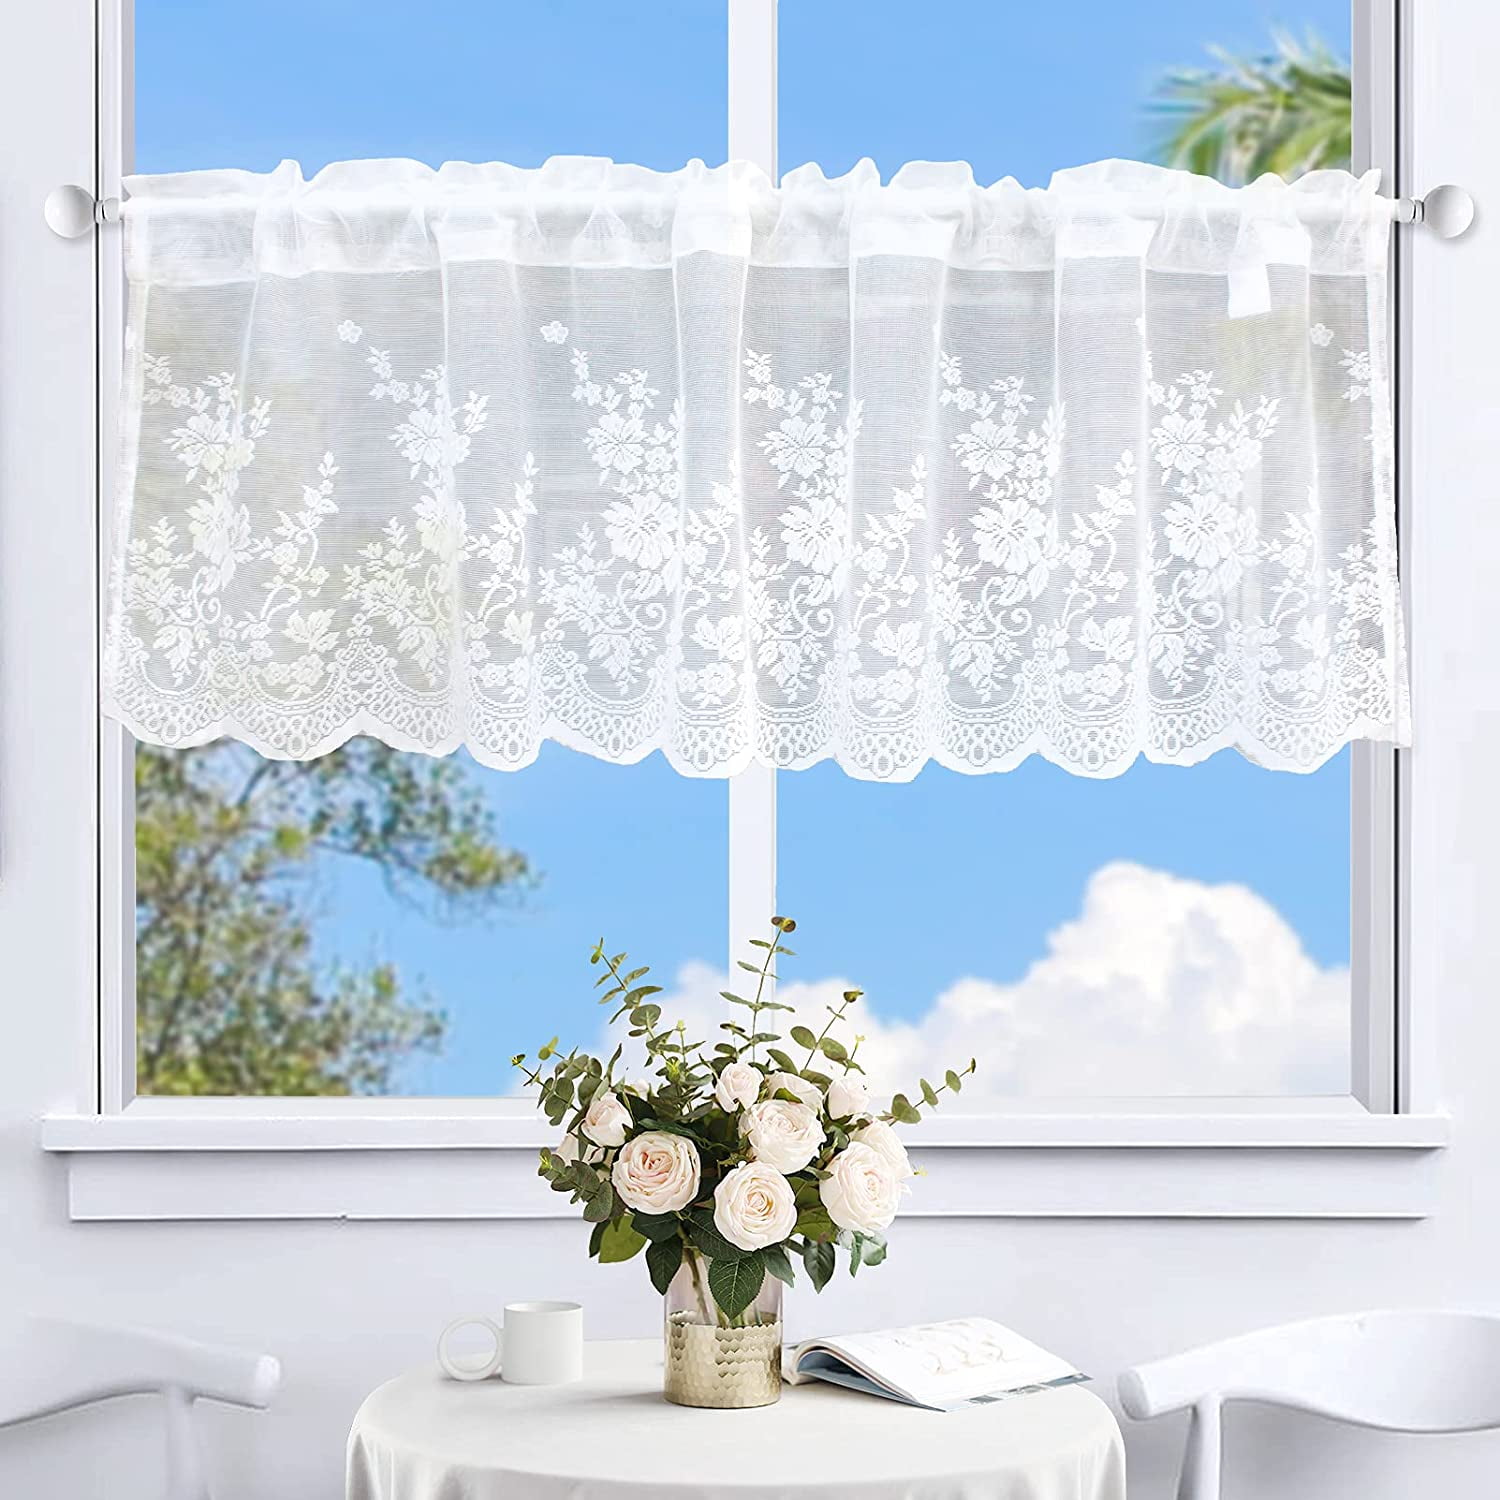 Jardiniere Curtain Panel Cafe Net Curtain Lace White Window Modern Decorative 